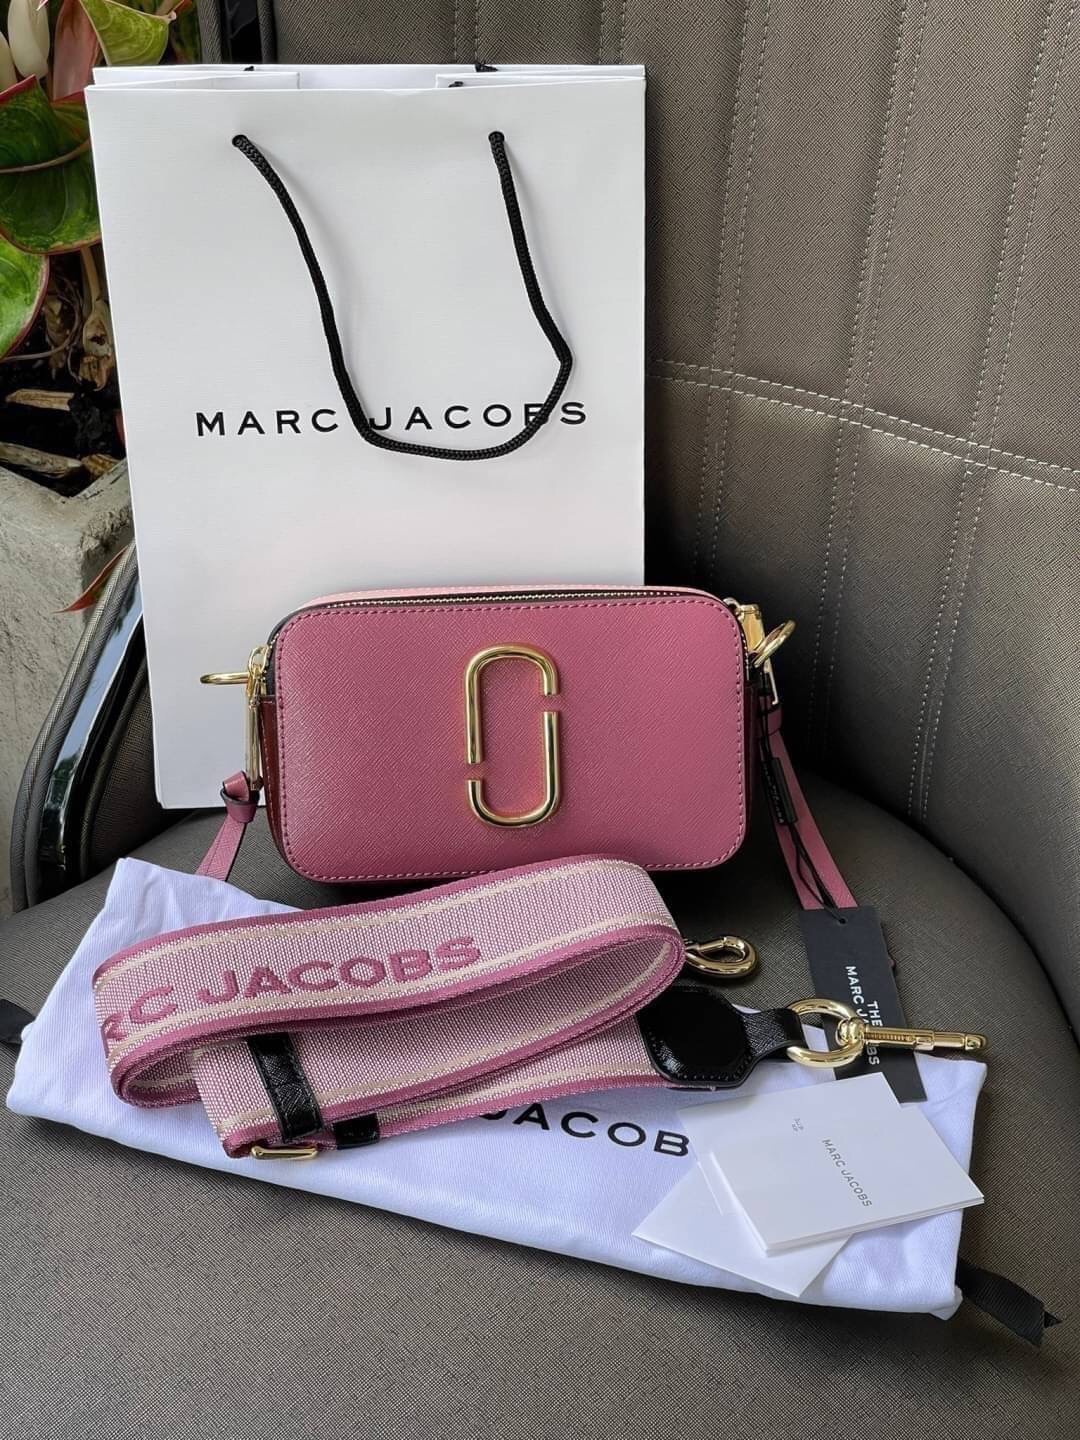 The Marc Jacobs Bag I'm Digging: The Snapshot - PurseBlog